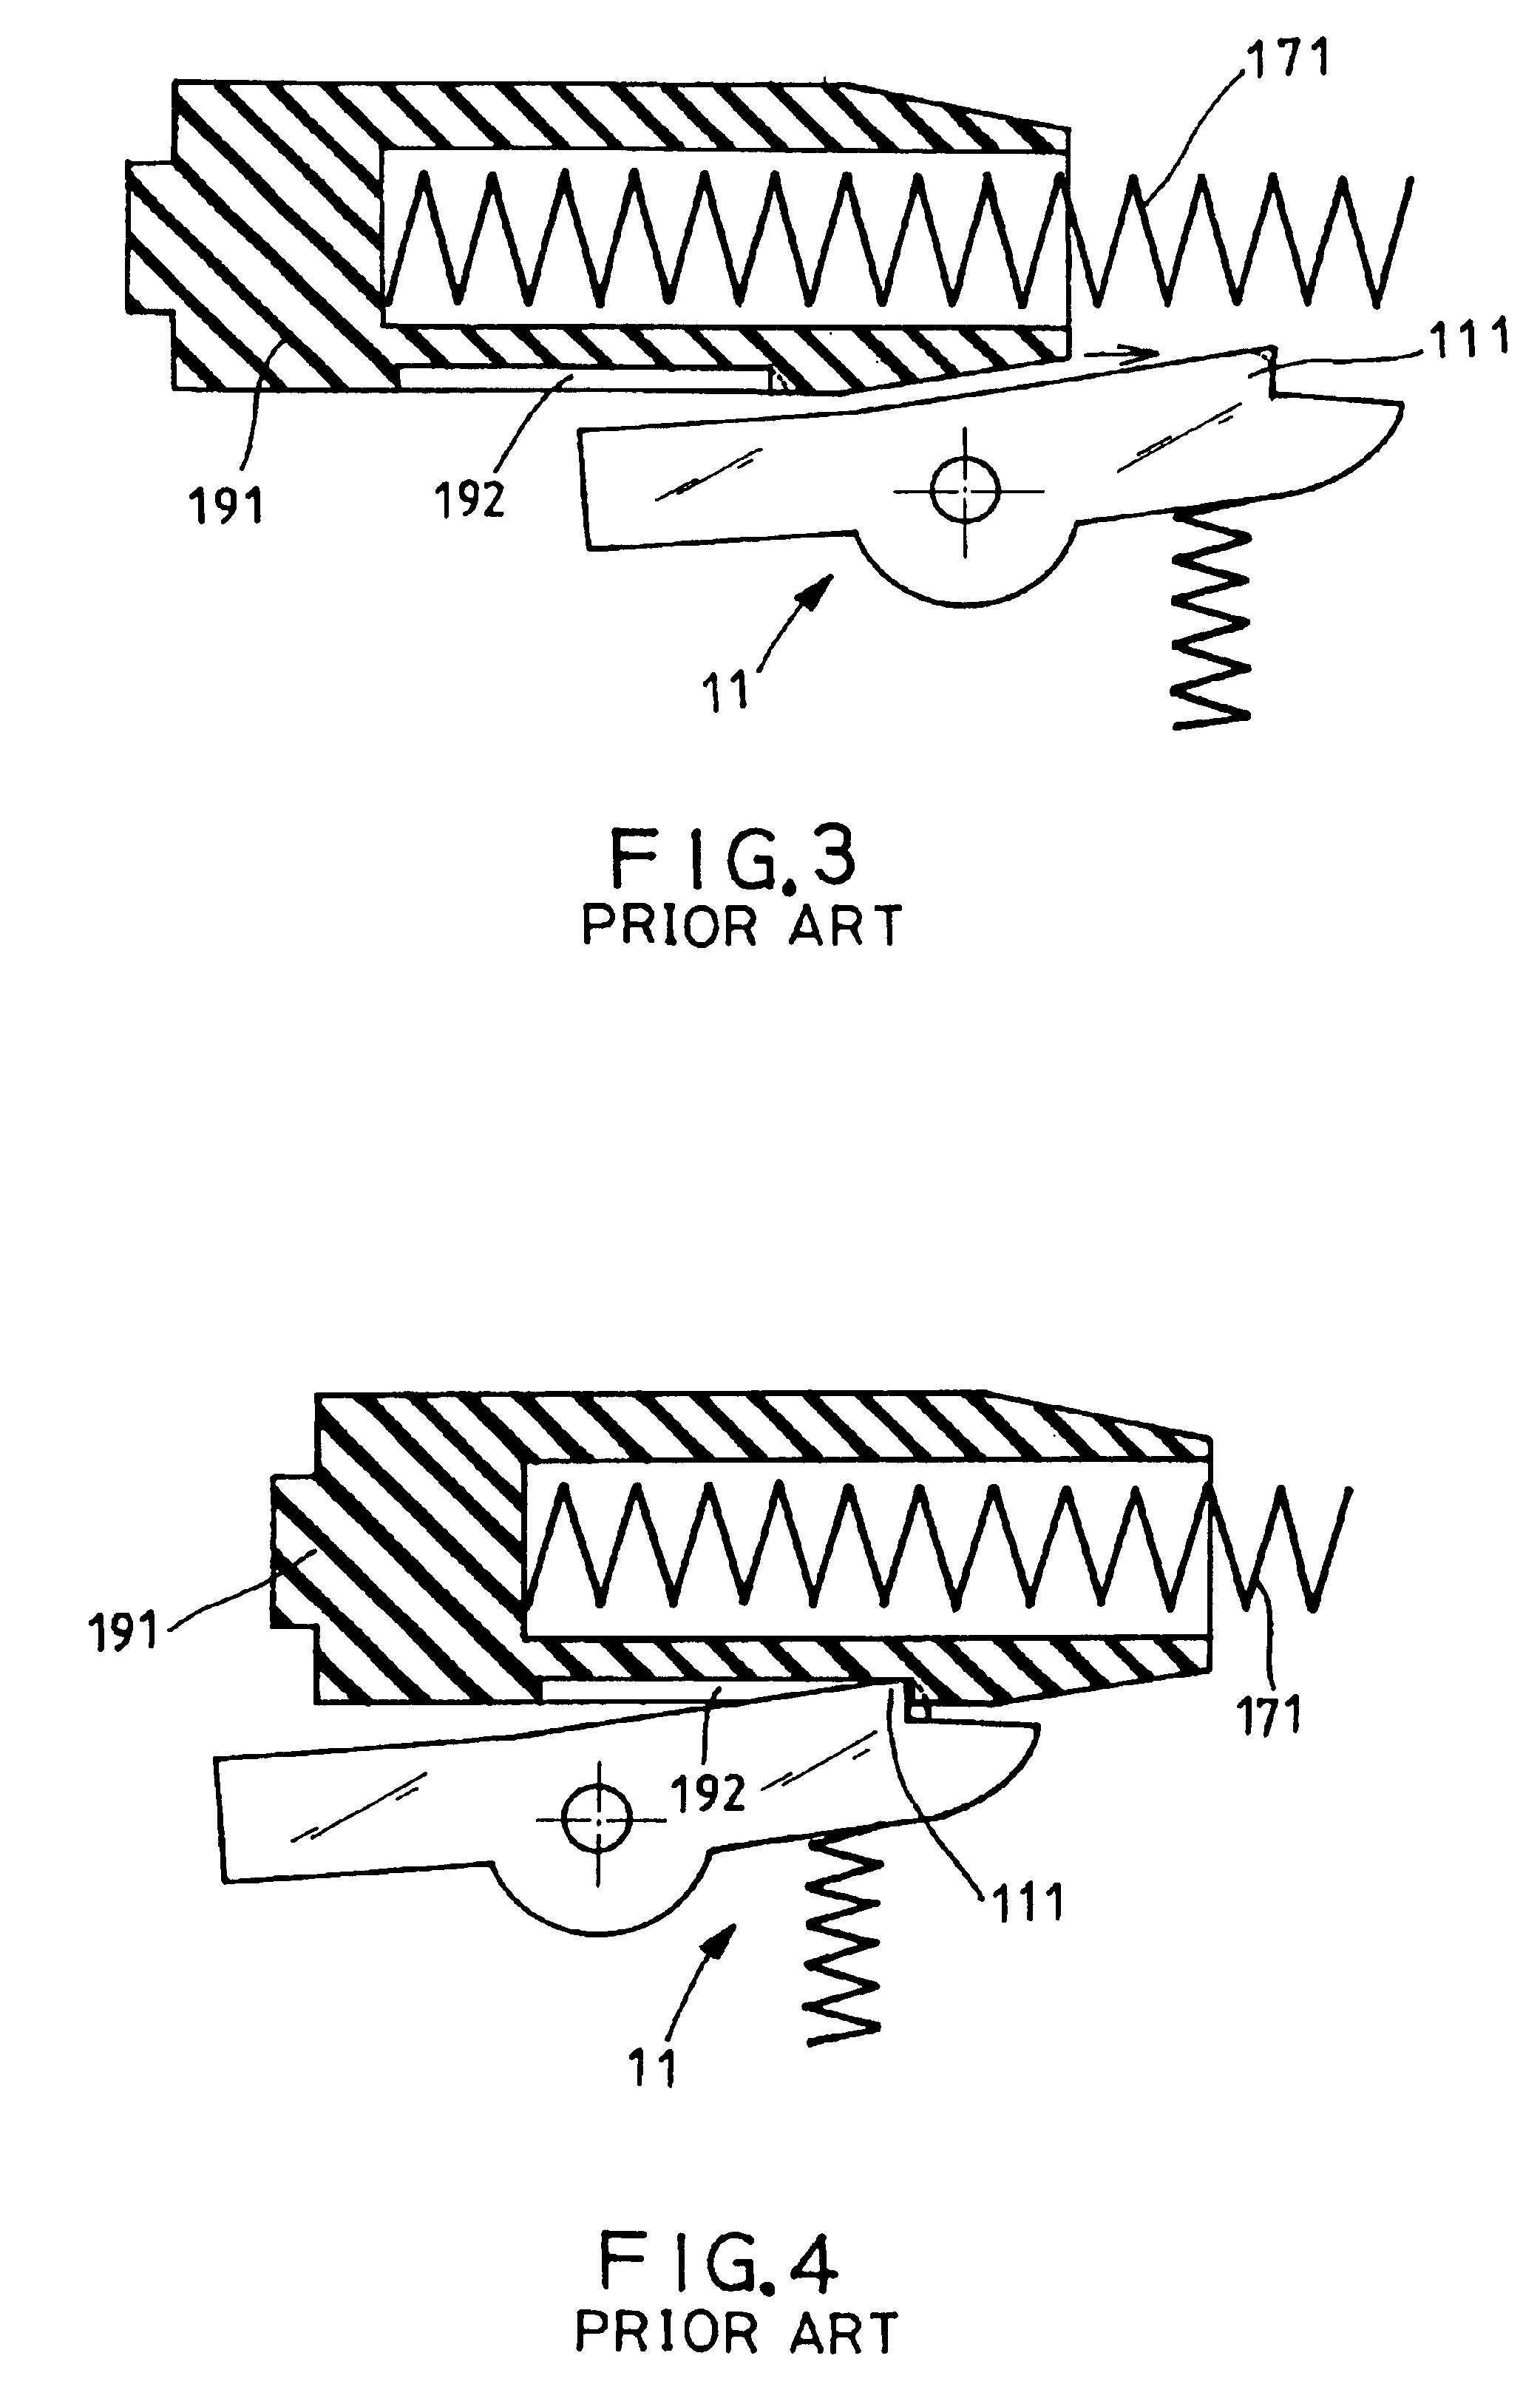 Paintgun with pneumatic feeding and discharging process